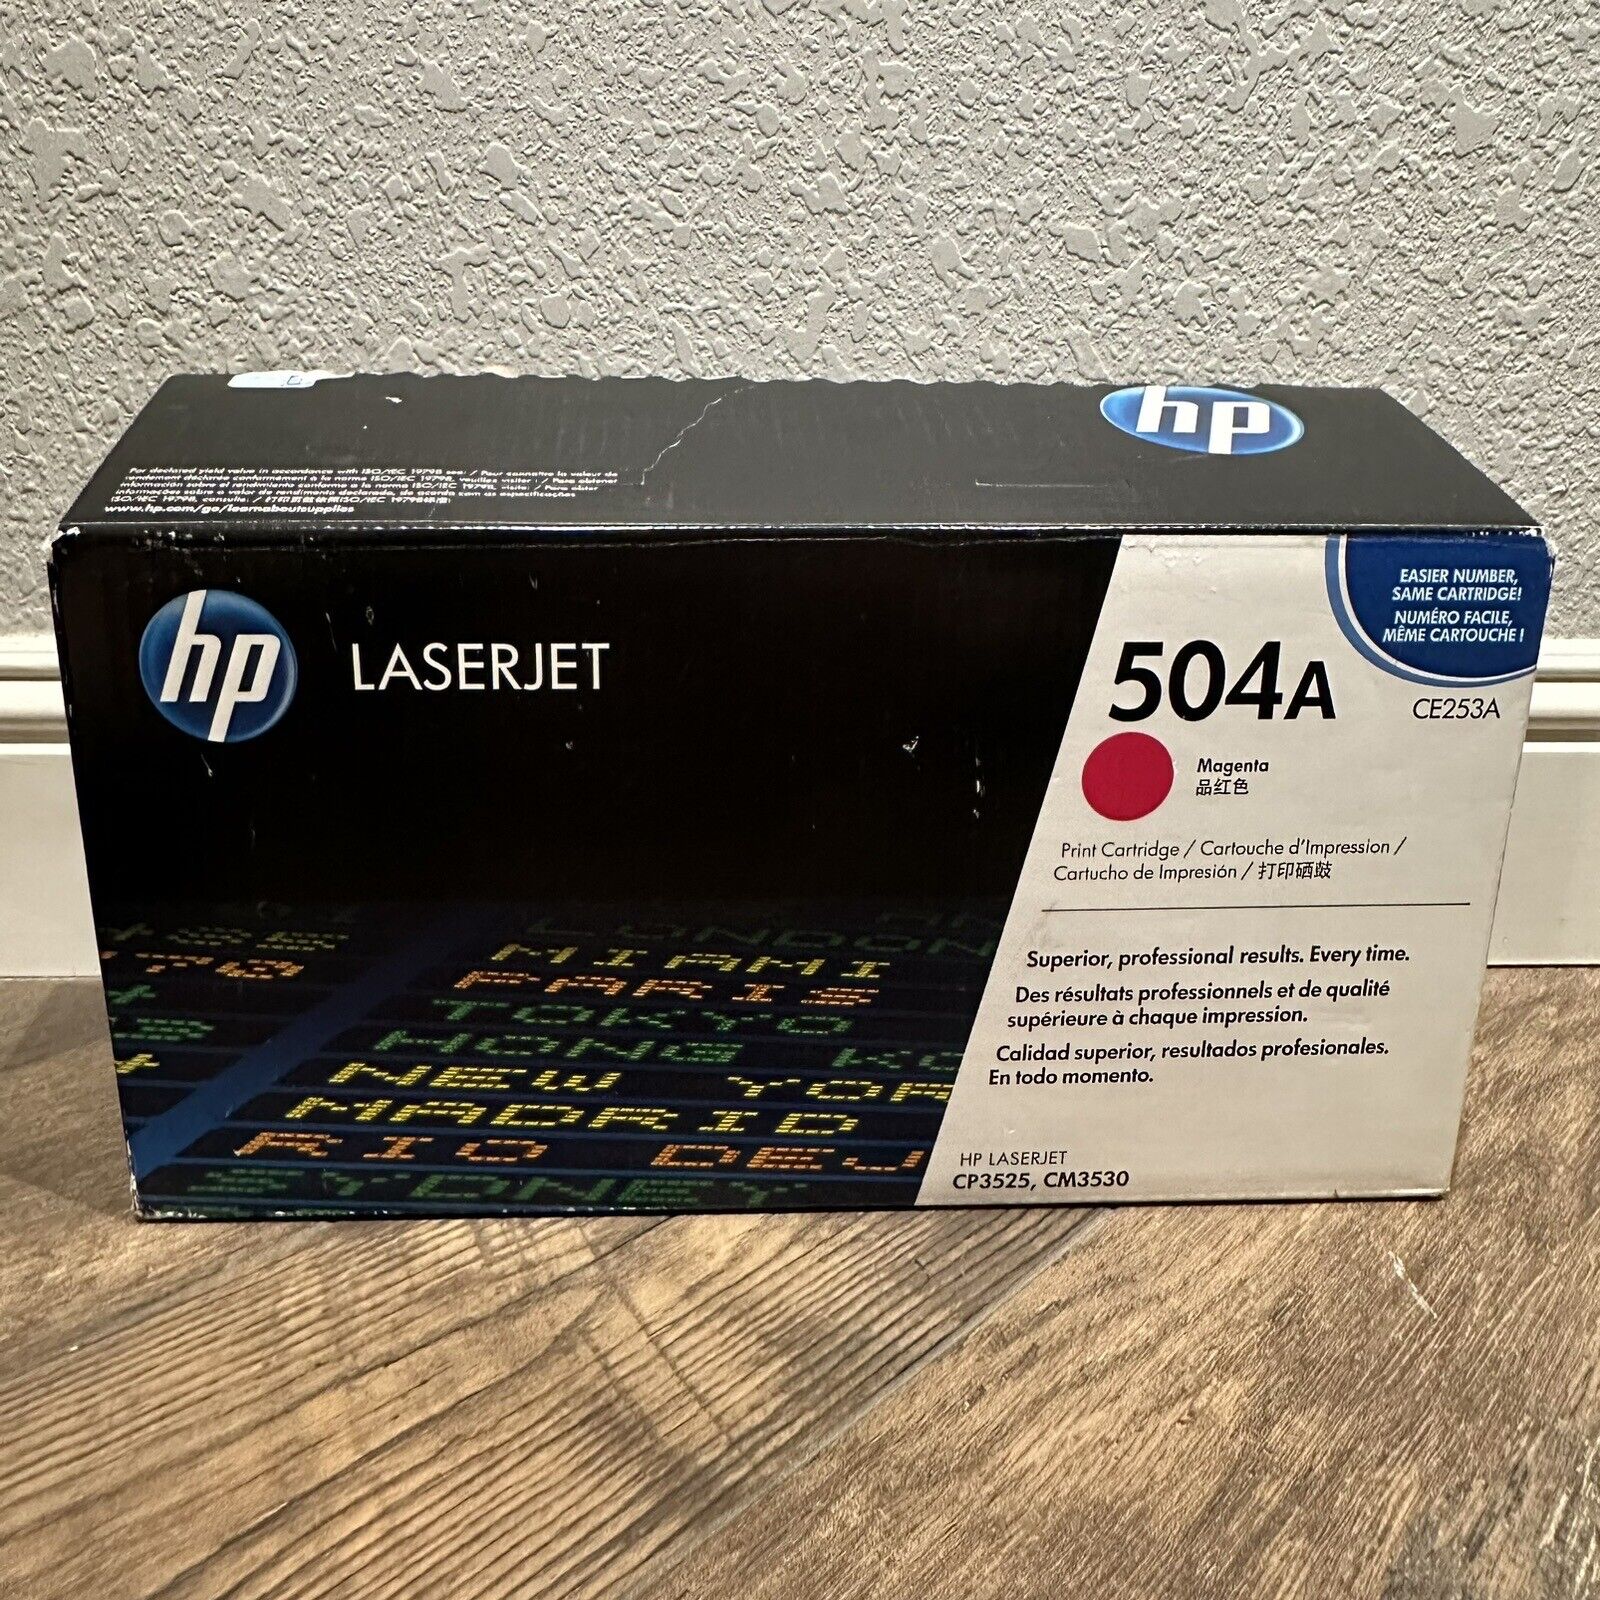 Genuine HP 504A LaserJet Toner Cartridge - Magenta (CE253A) NEW Open Box